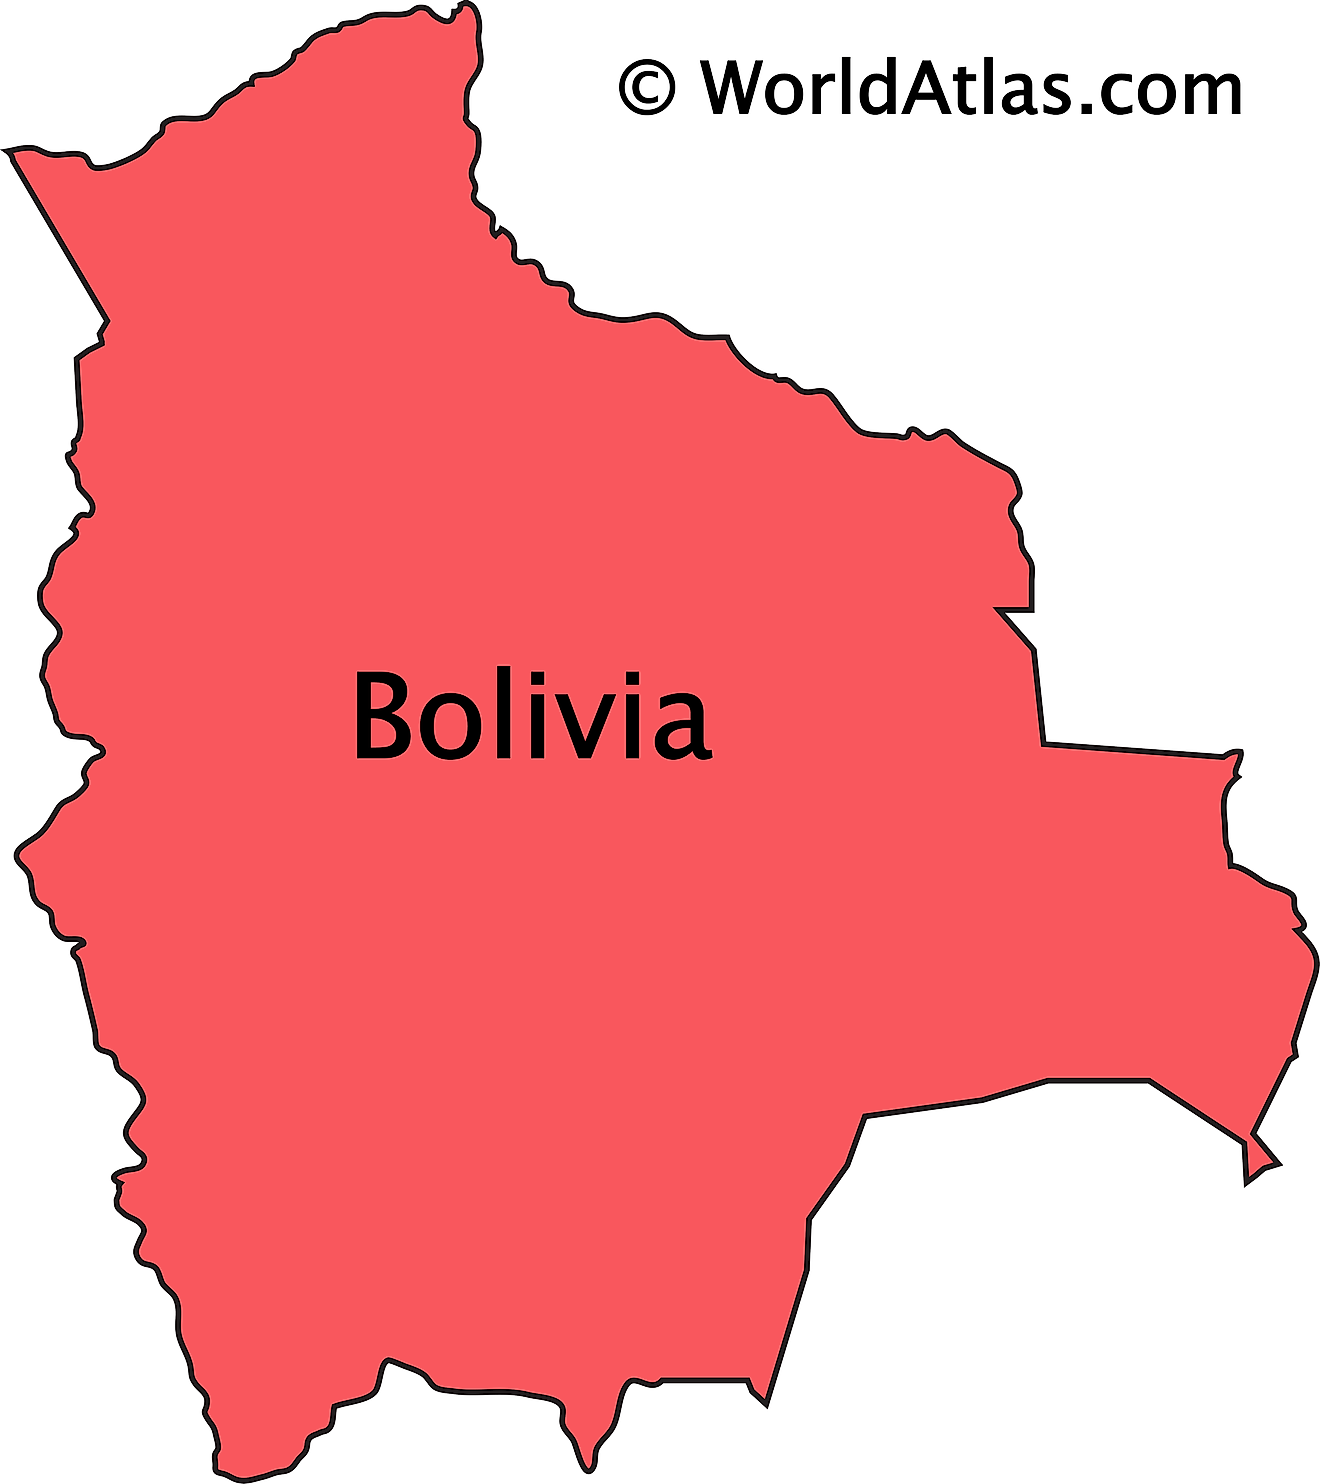 Bolivia Maps & Facts - World Atlas